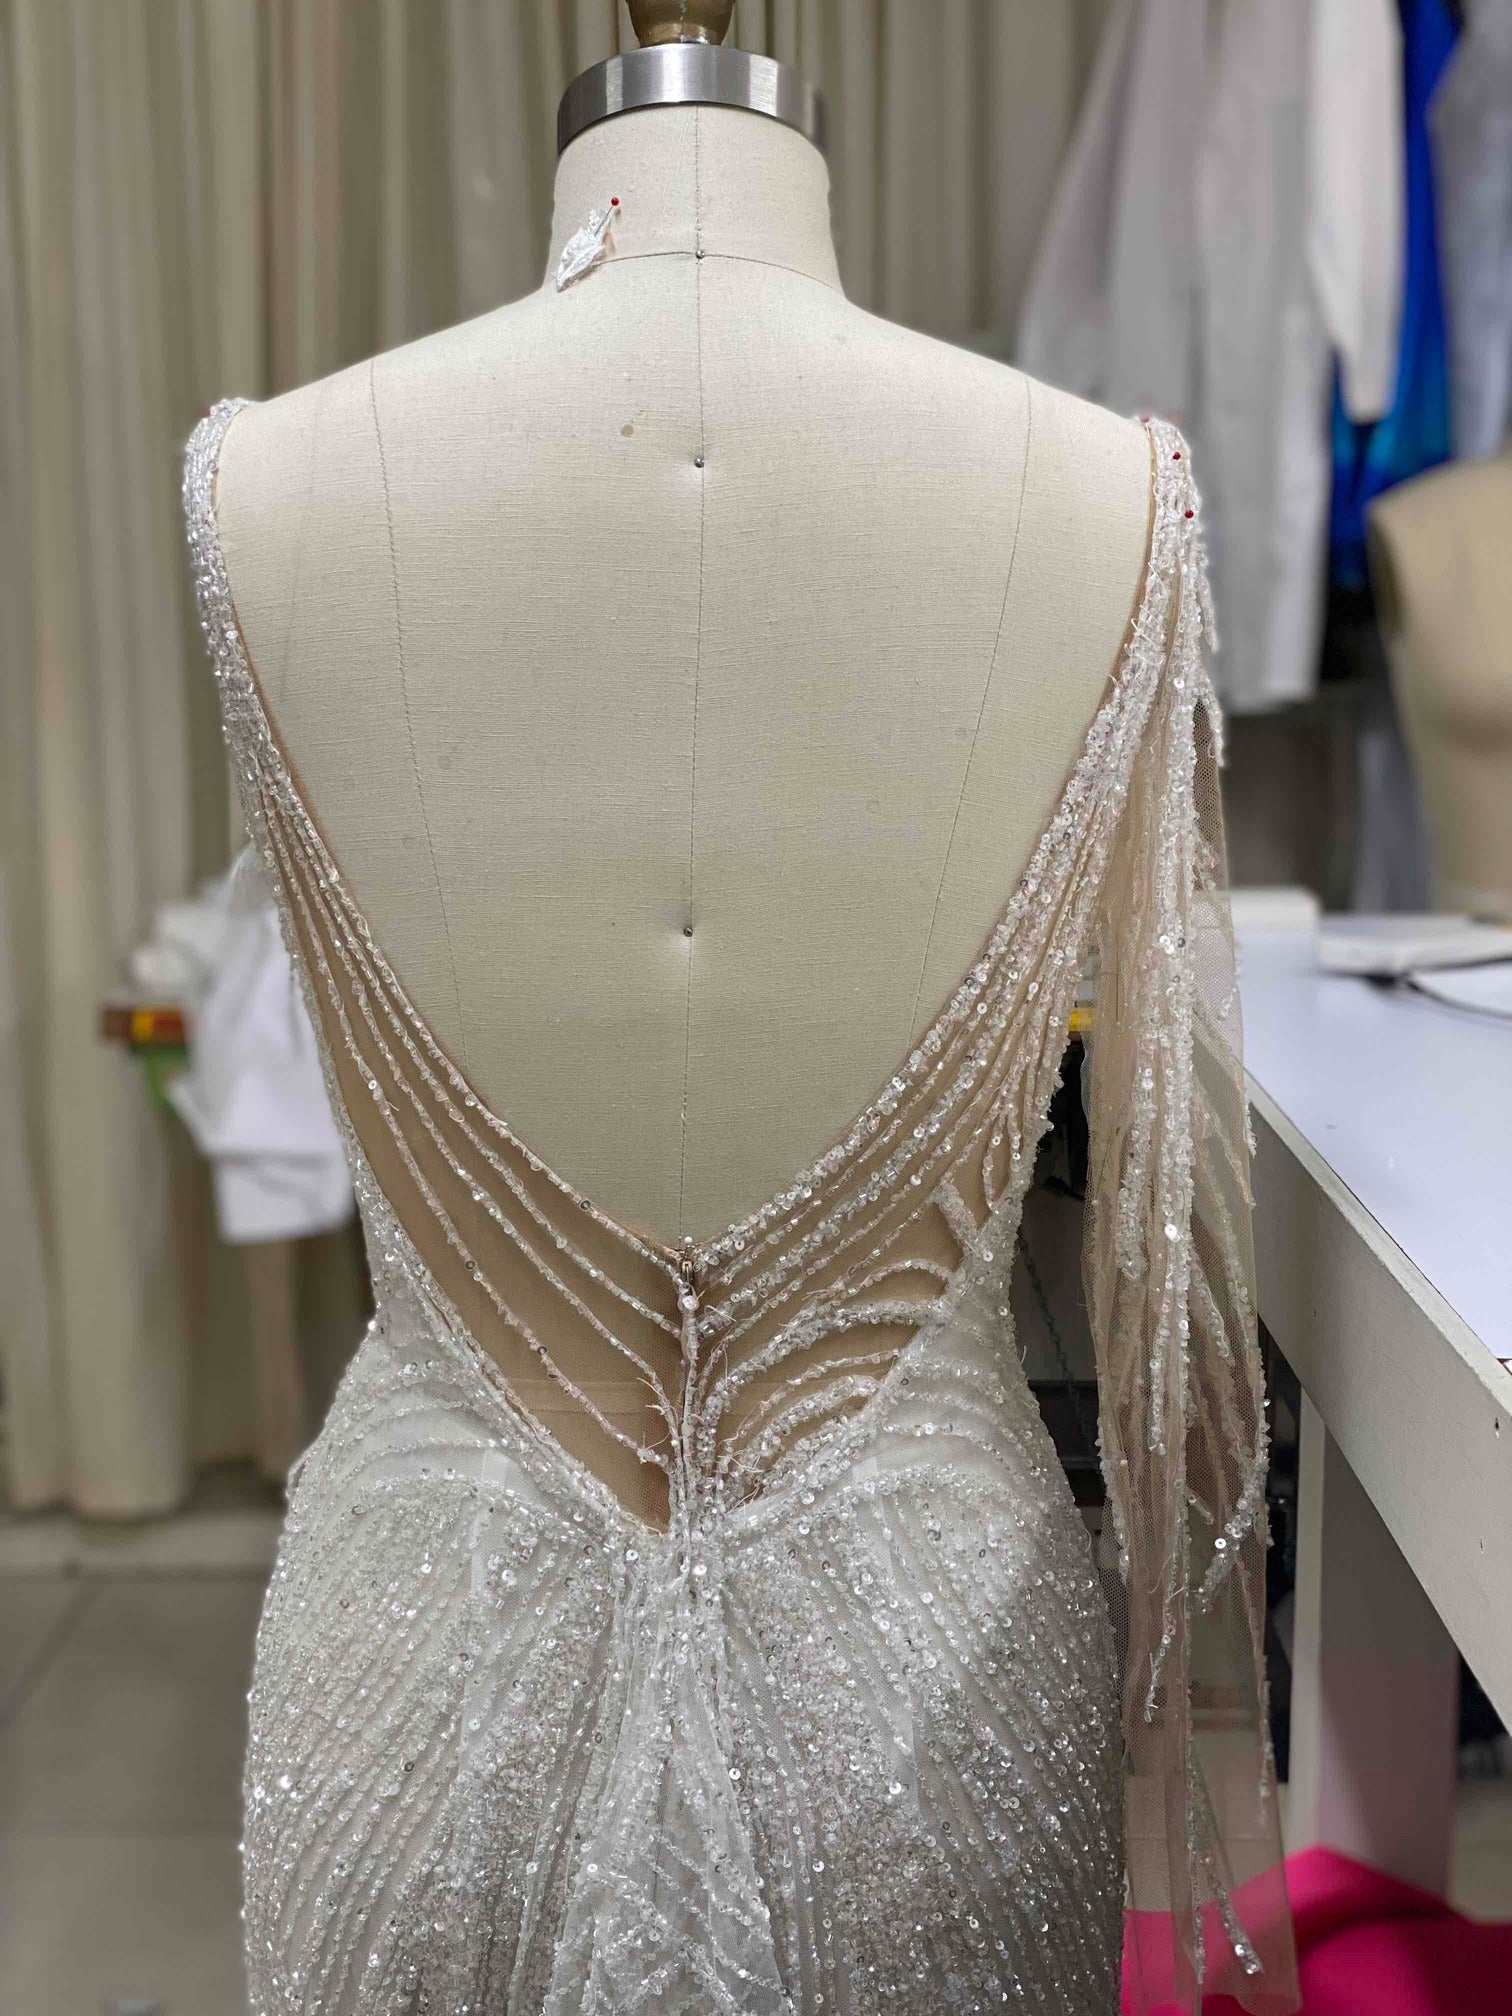 dress on dress form at bridal studio